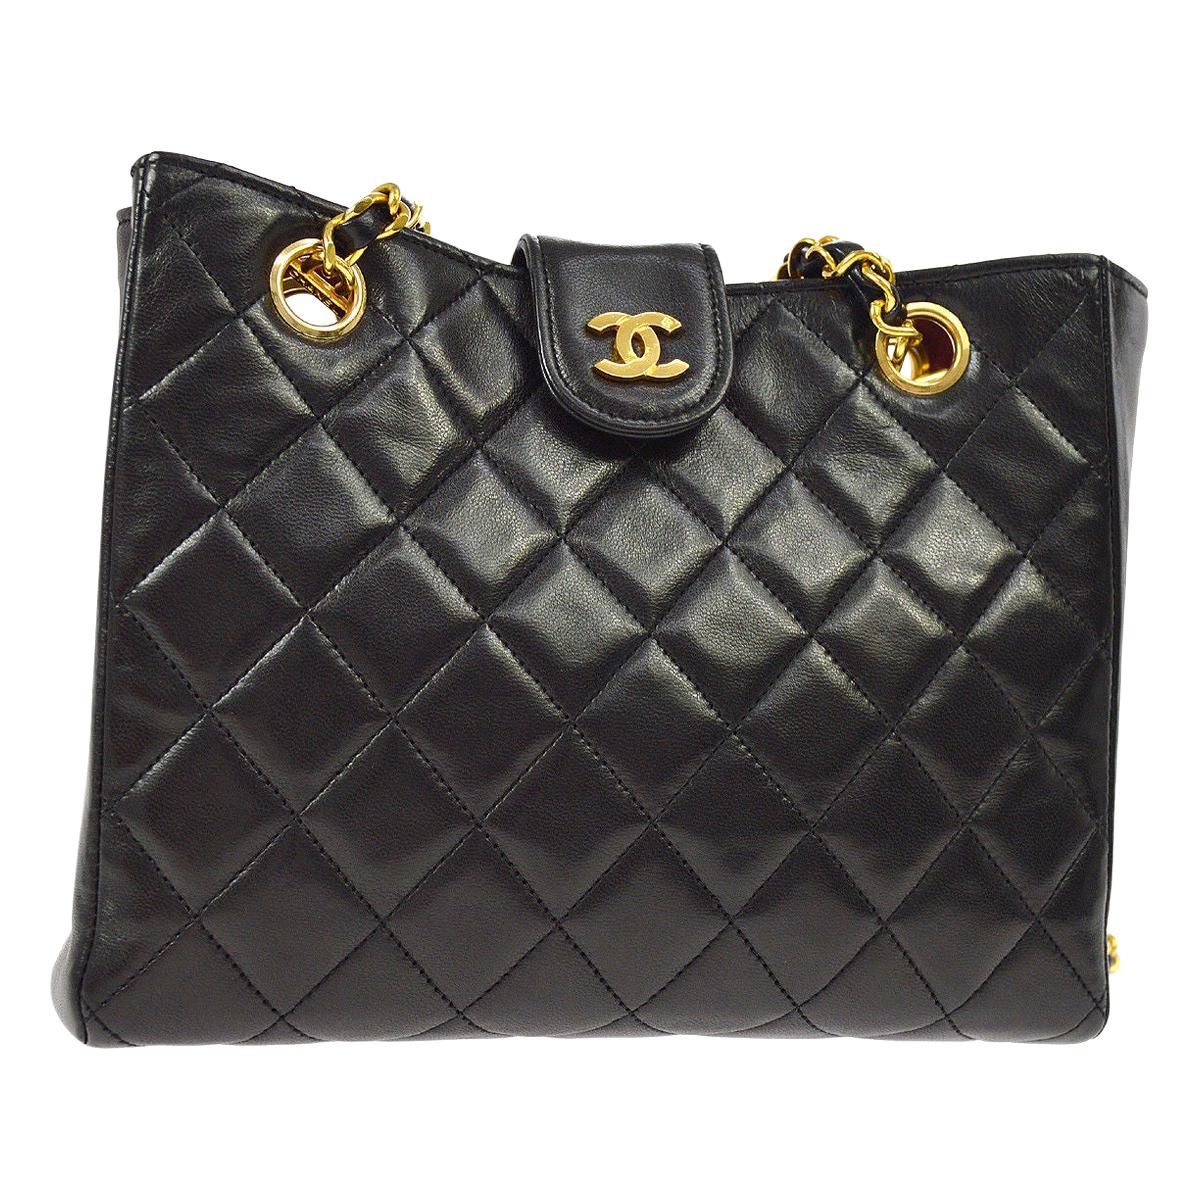 Chanel Black Leather Gold Small Carryall Shoulder Shopper Tote Bag